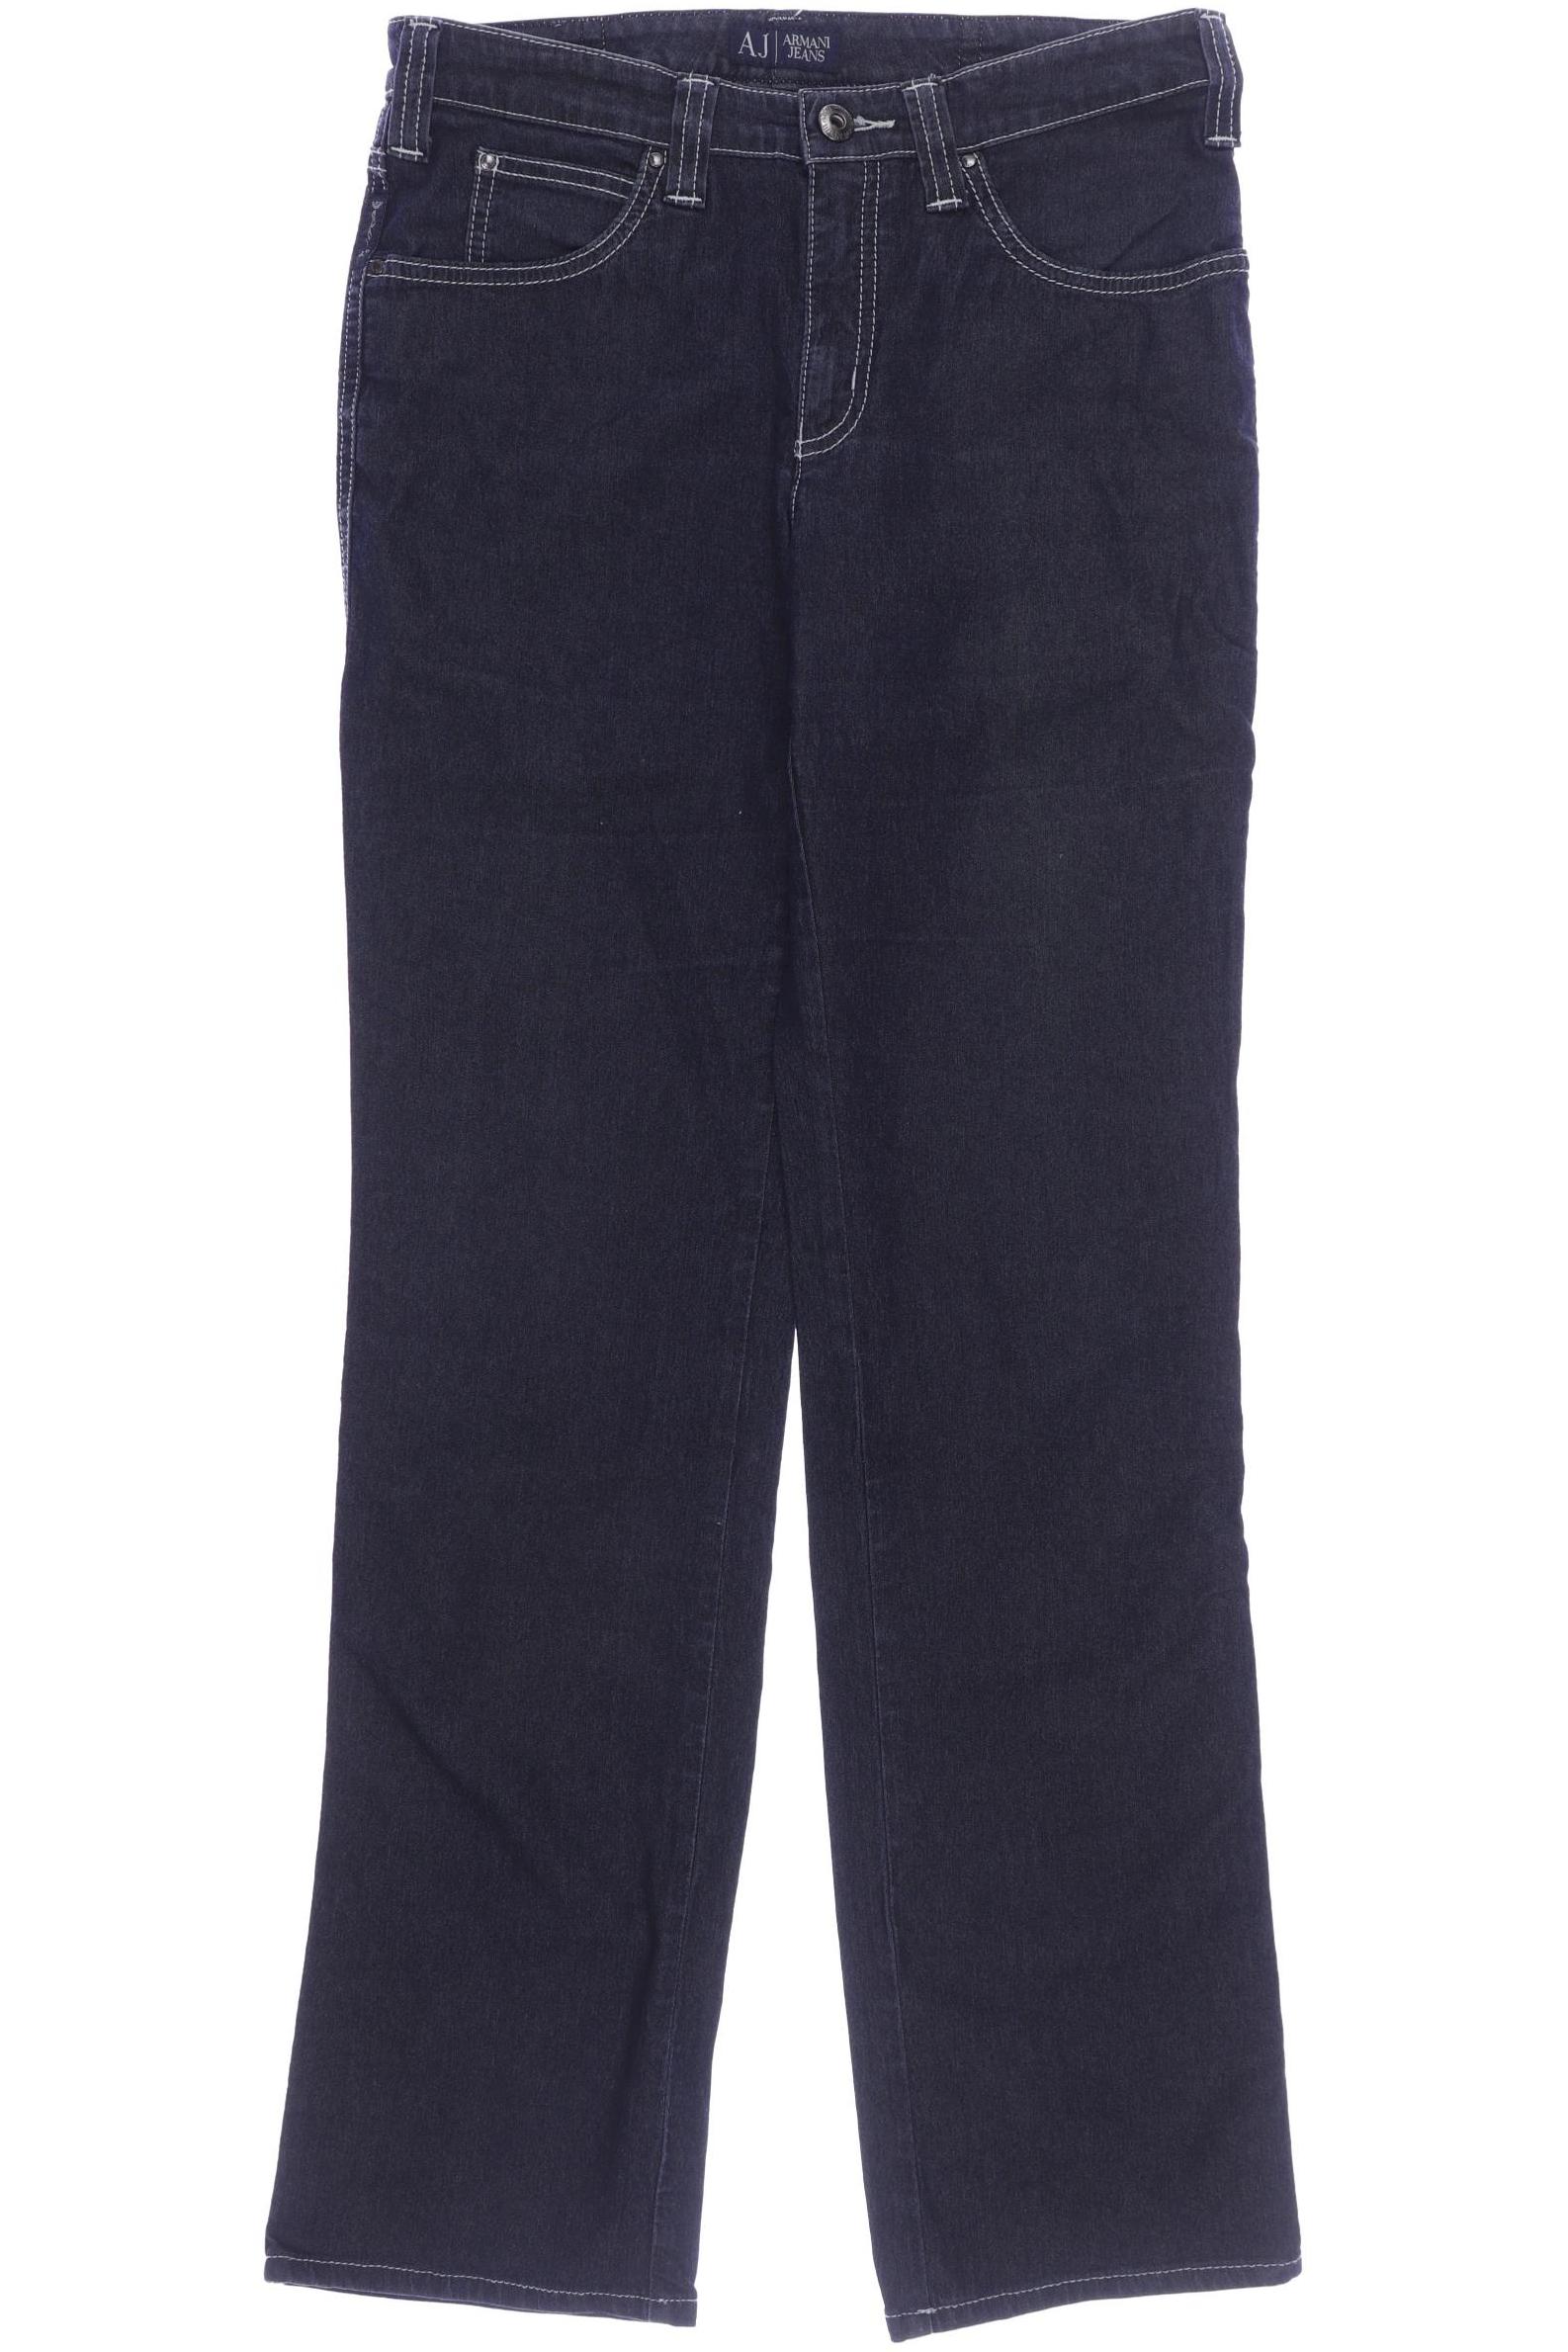 Armani Jeans Damen Jeans, marineblau von Armani Jeans